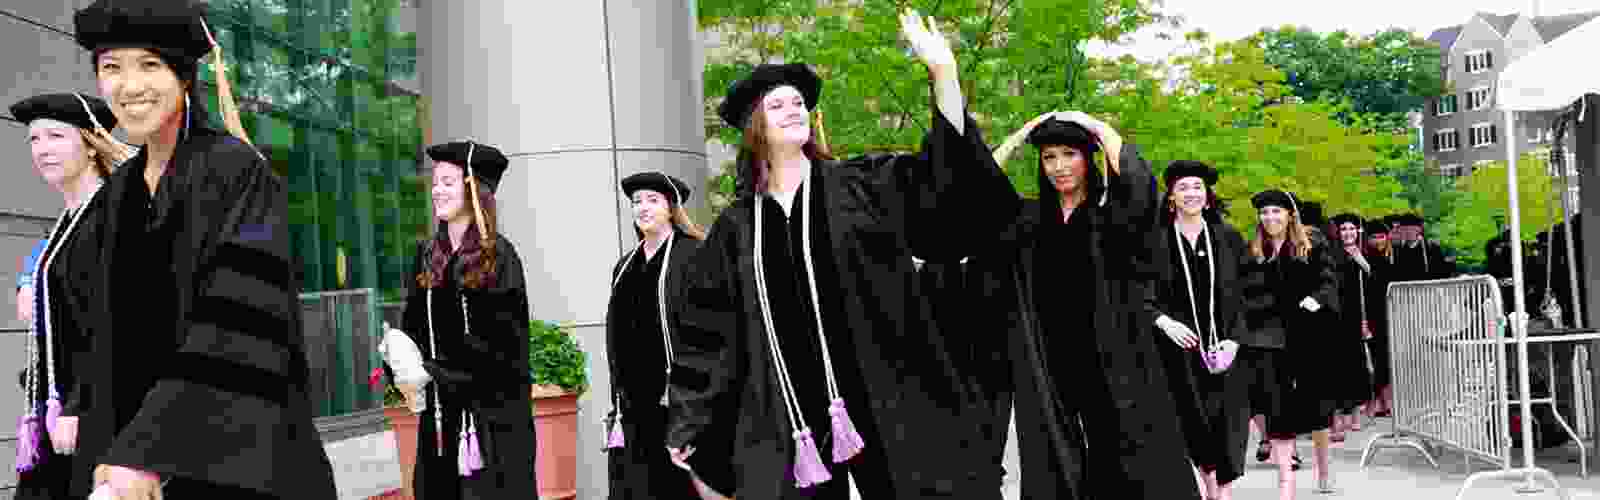 Grad-students-waving.png